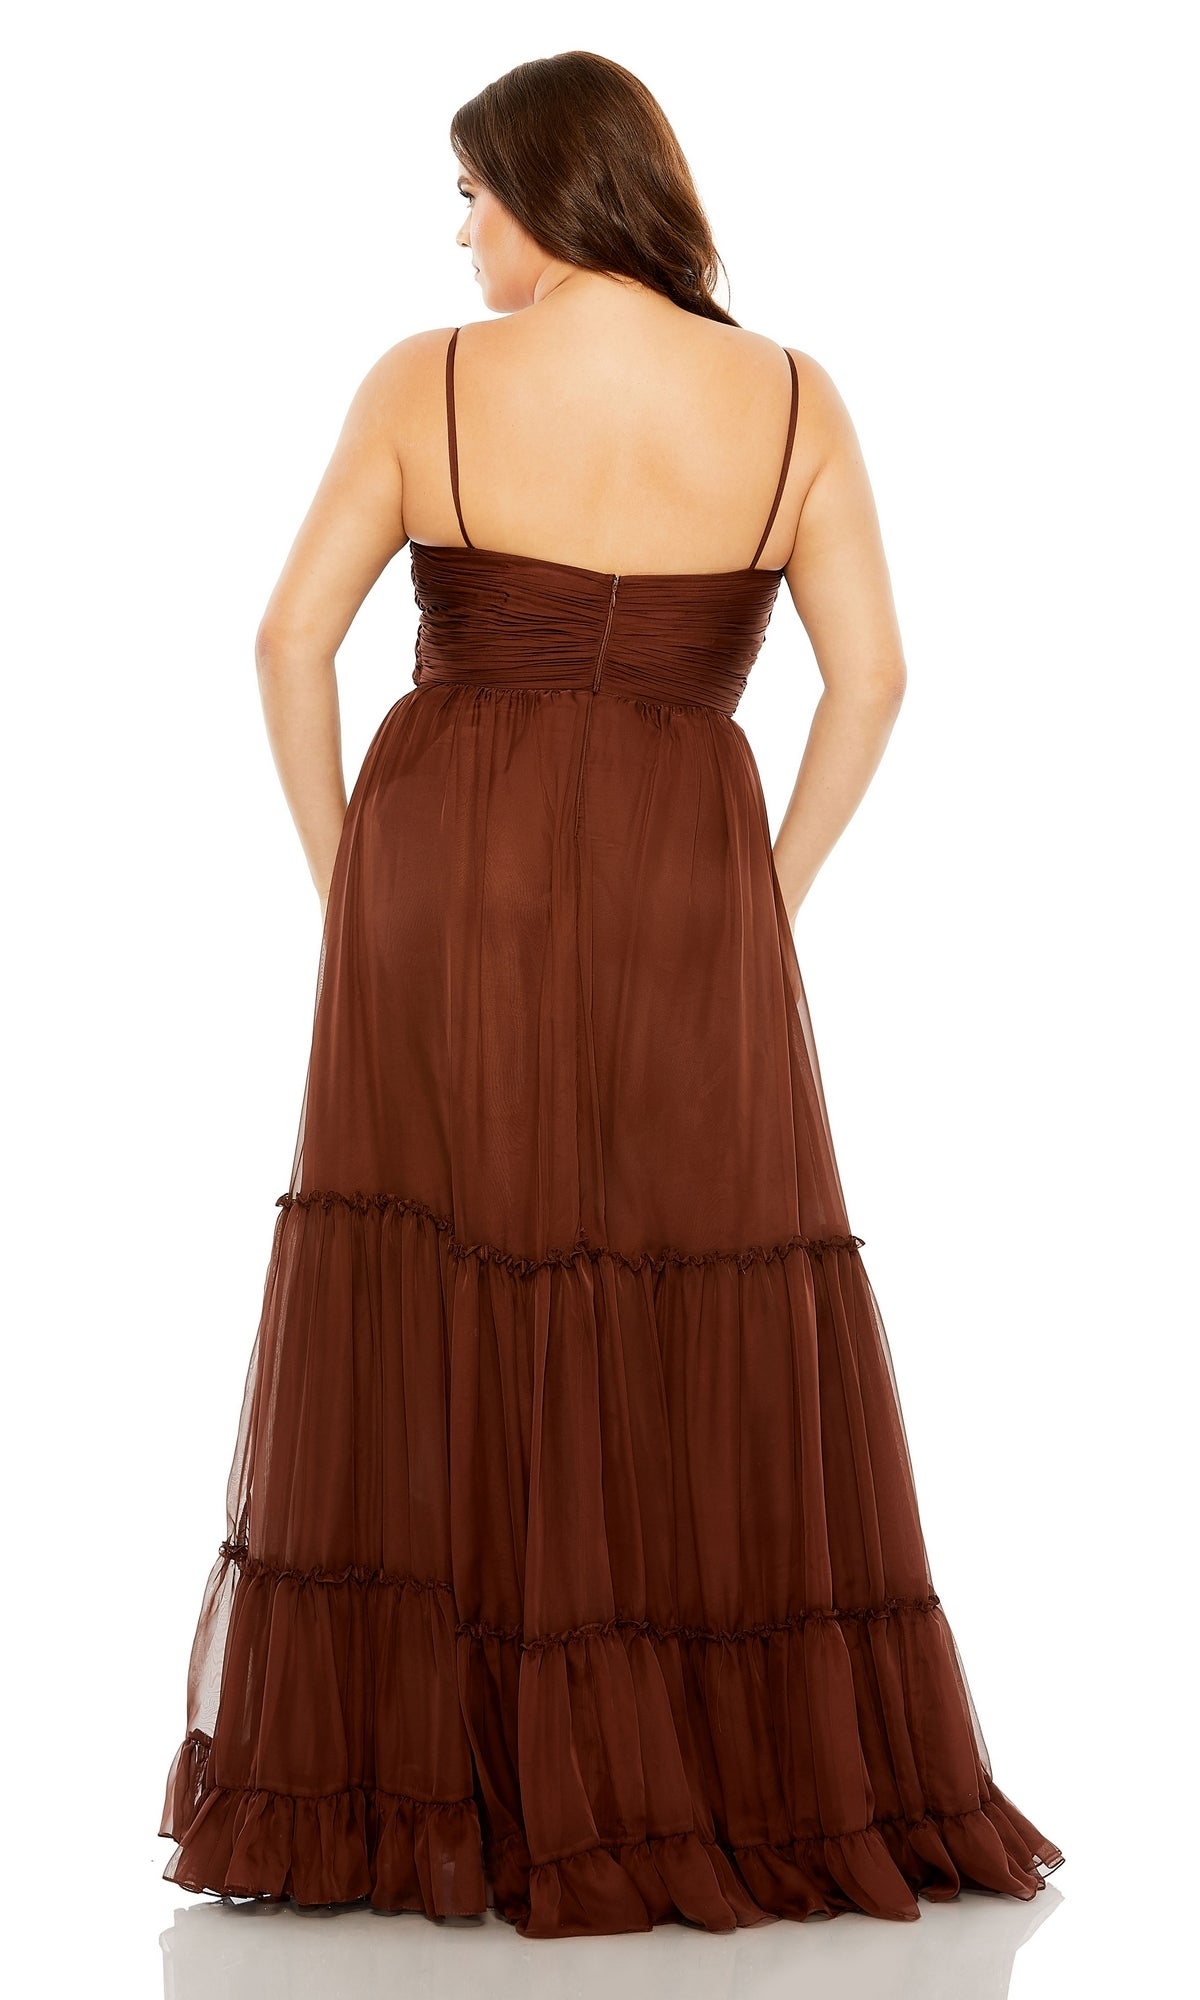 Long Plus-Size Formal Dress 68542 by Mac Duggal